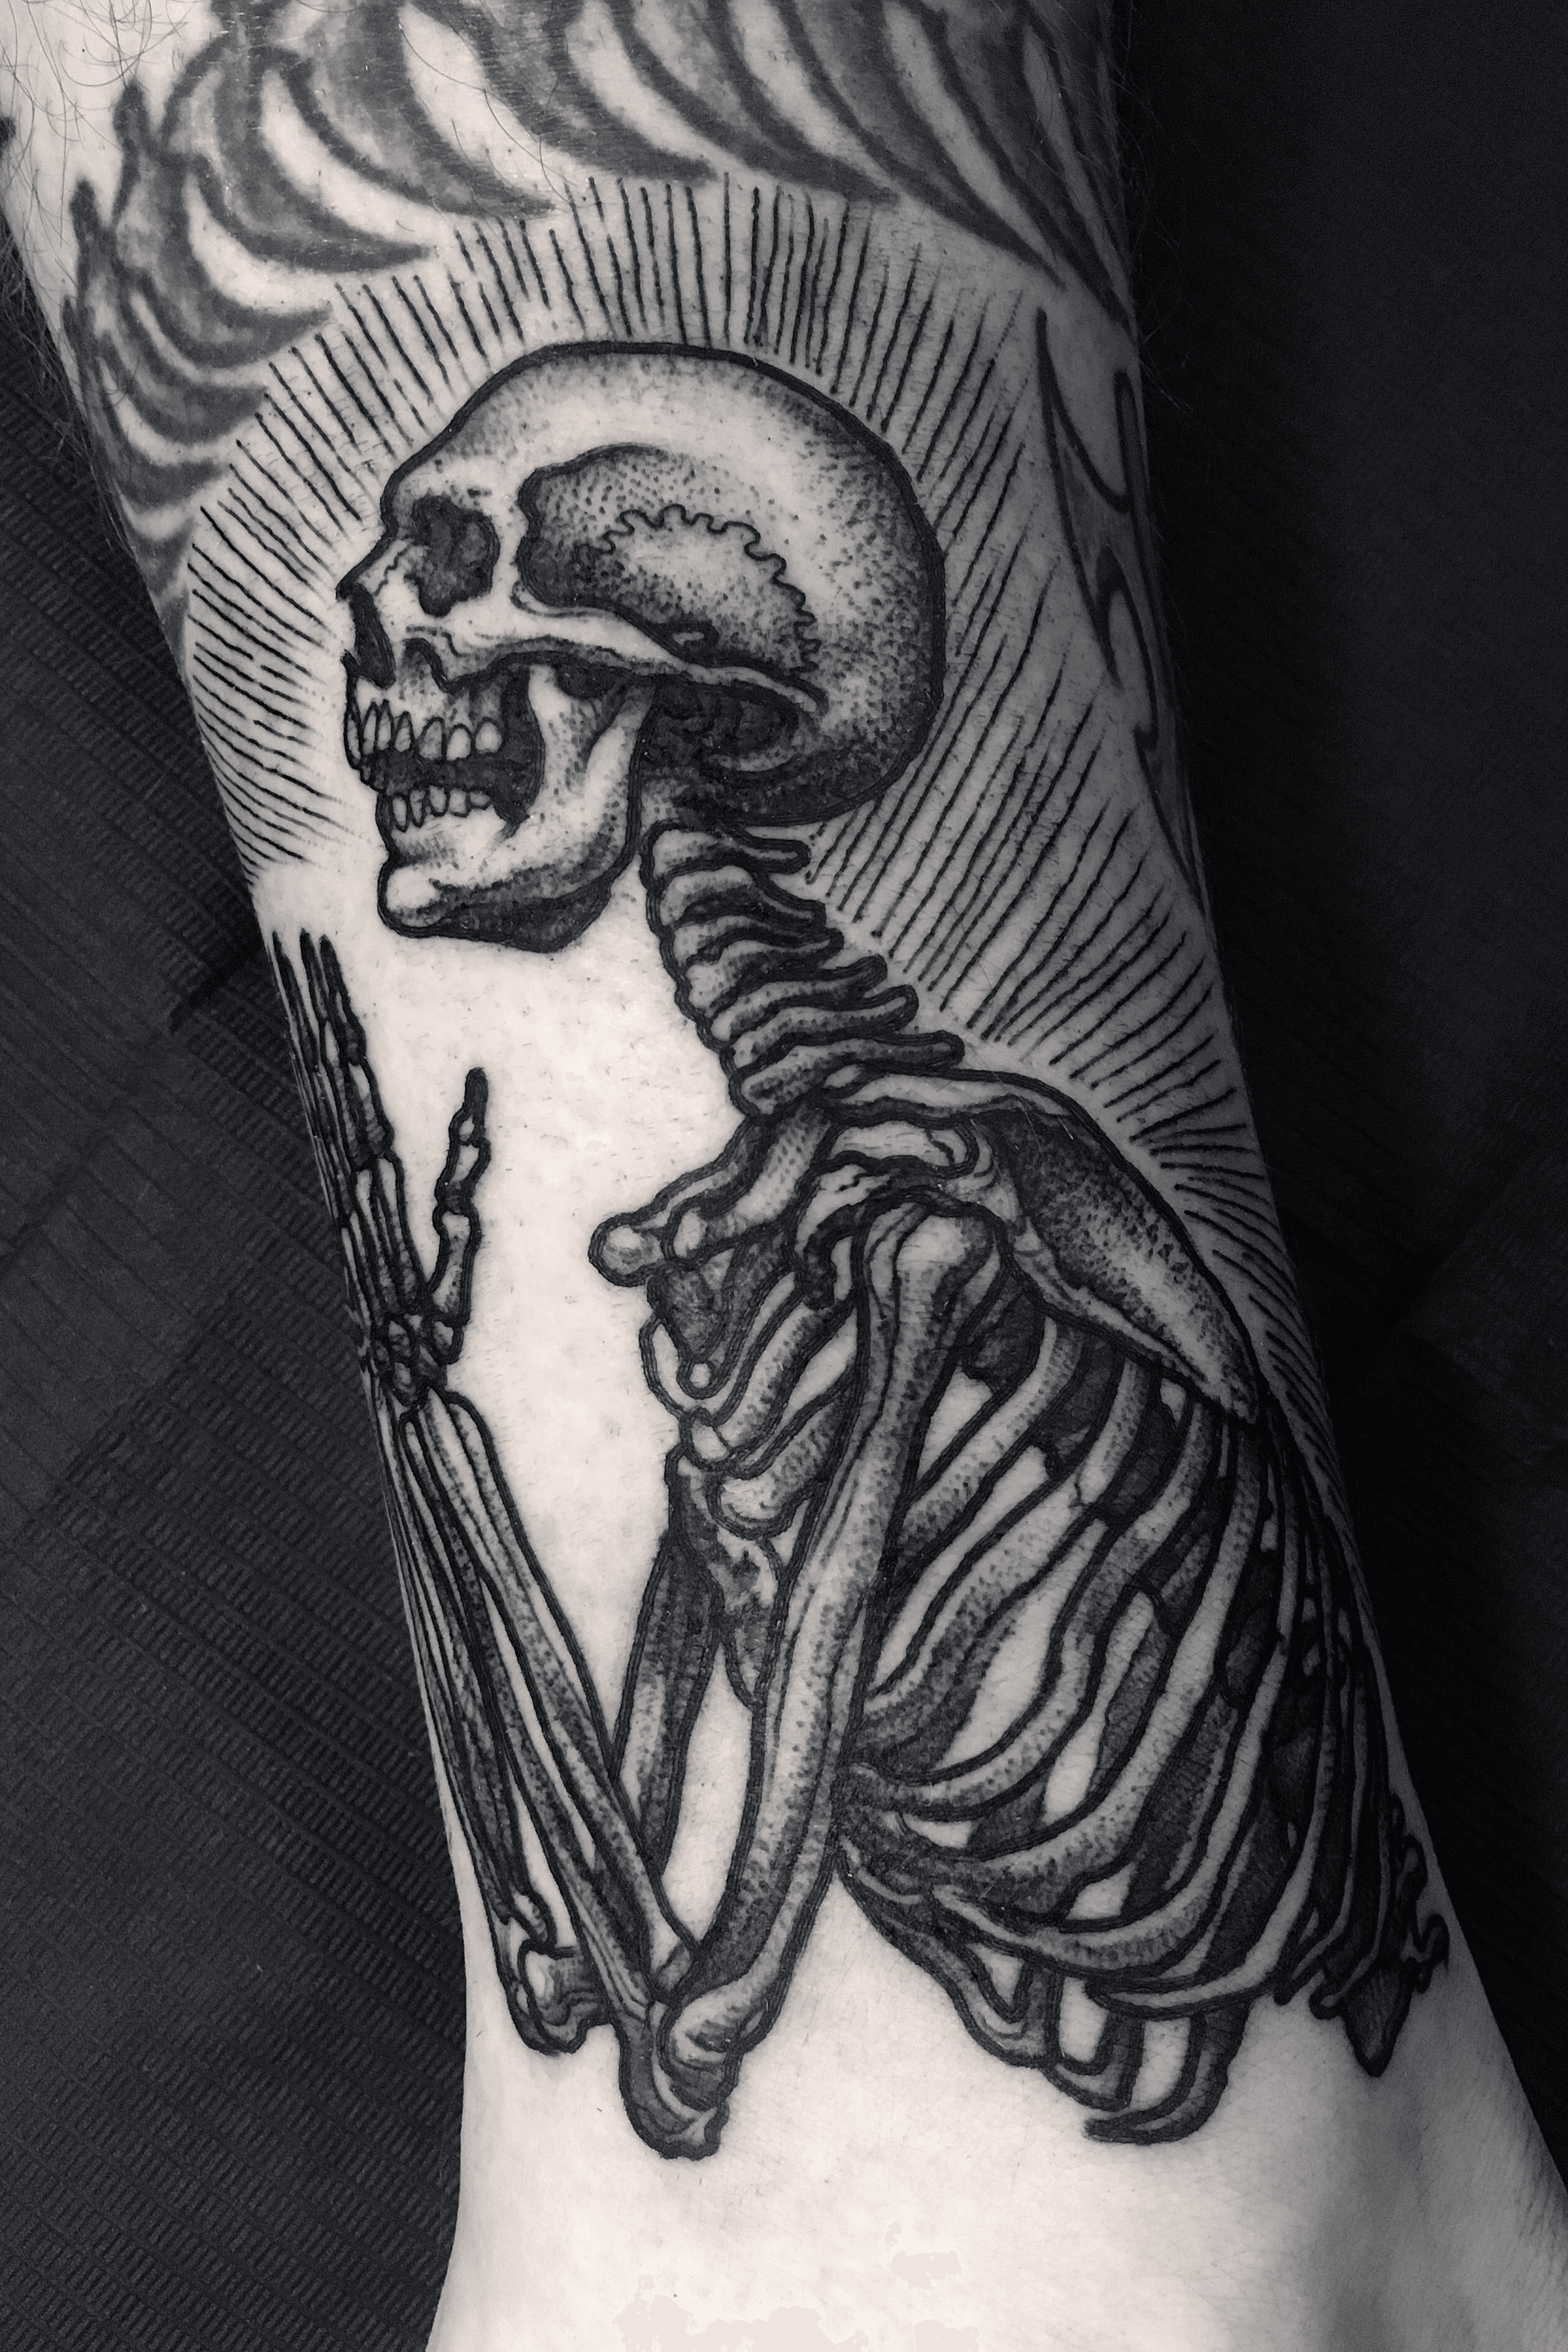 TattooSnobcom  William Cheseldens Praying Skeleton tattoo by  ryanjenkinstattoo at seventattoolv in Las Vegas Nevada  ryanjenkinstattoo lasvegas vegas nevada seventattoolv prayingskeleton  williamcheselden  Facebook